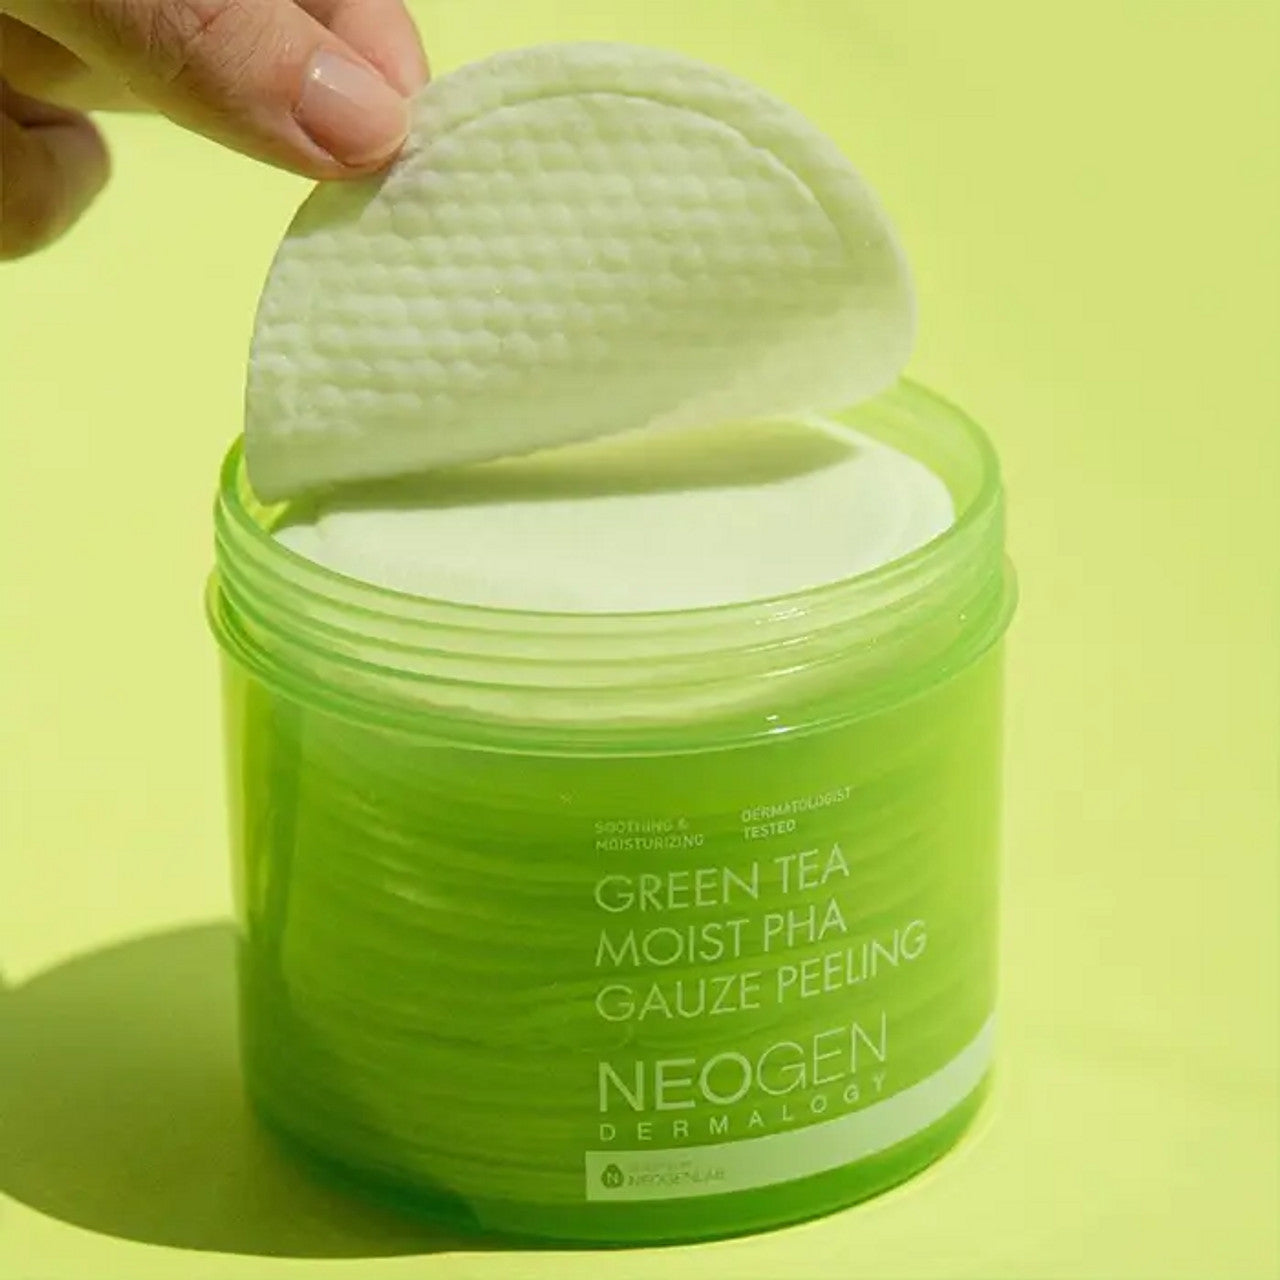 NEOGEN Green Tea Moist PHA Gauze Peeling - 30 pads